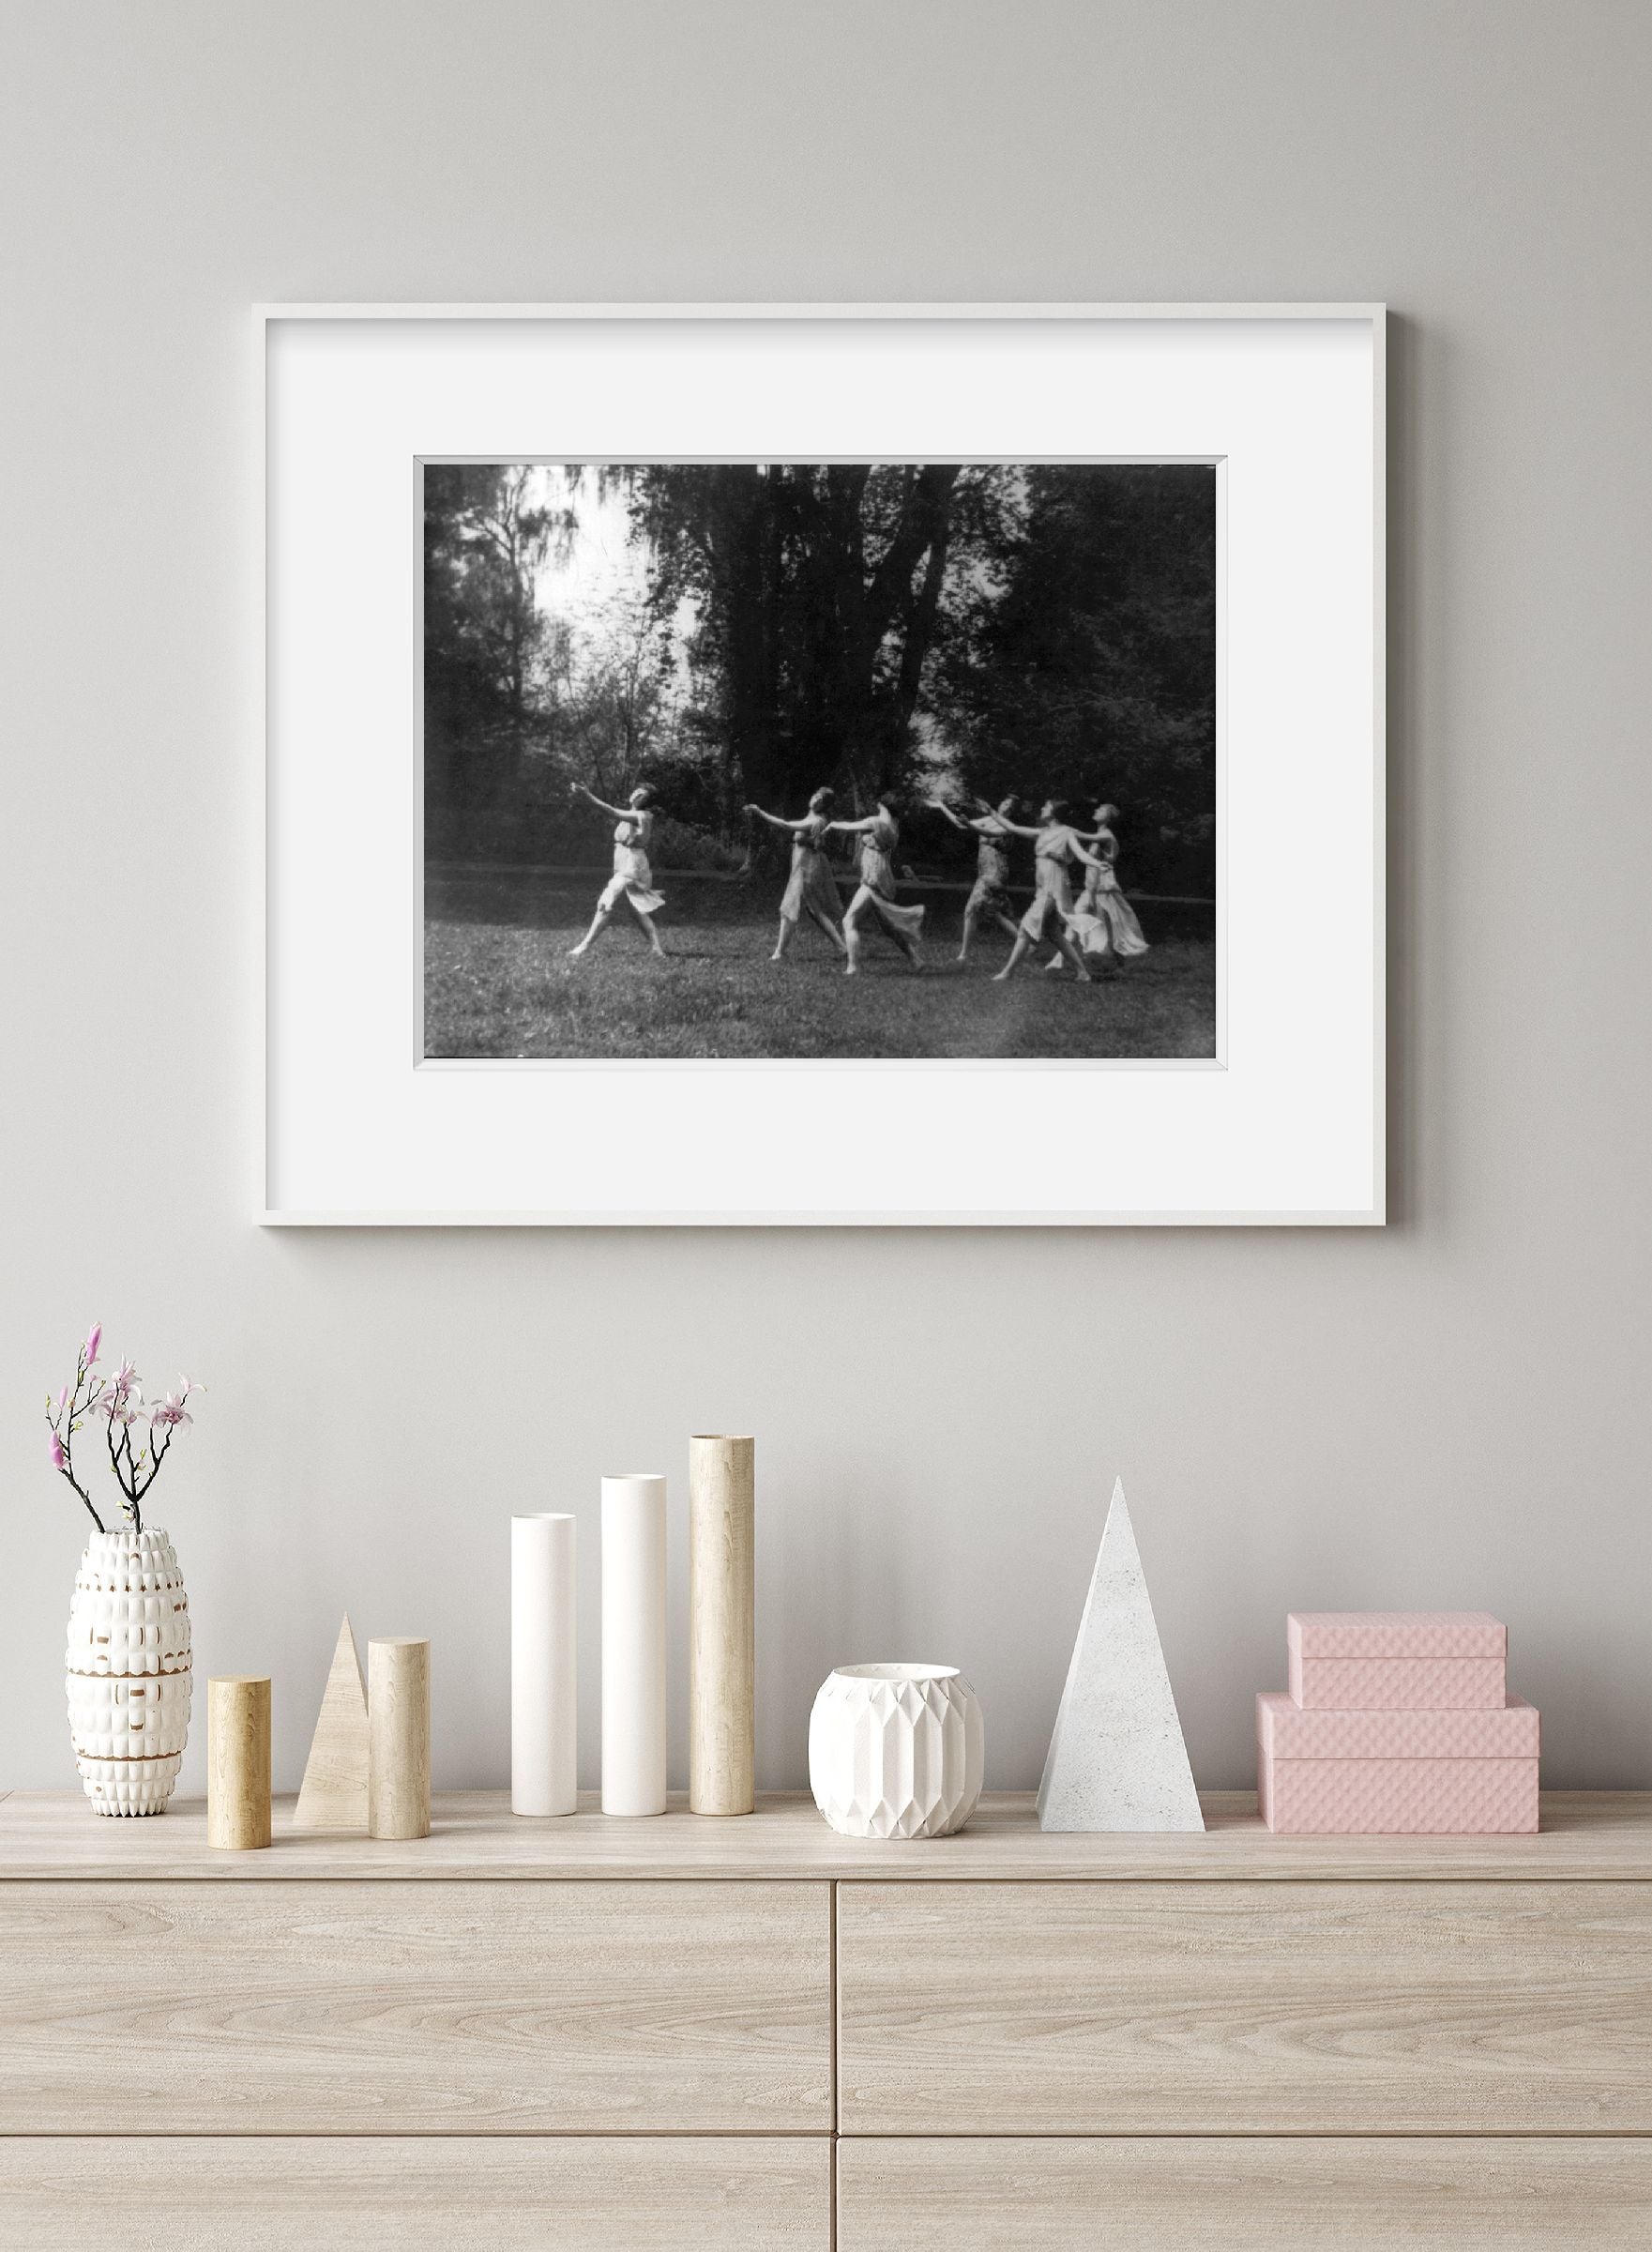 Photograph of Isadora Duncan dancers